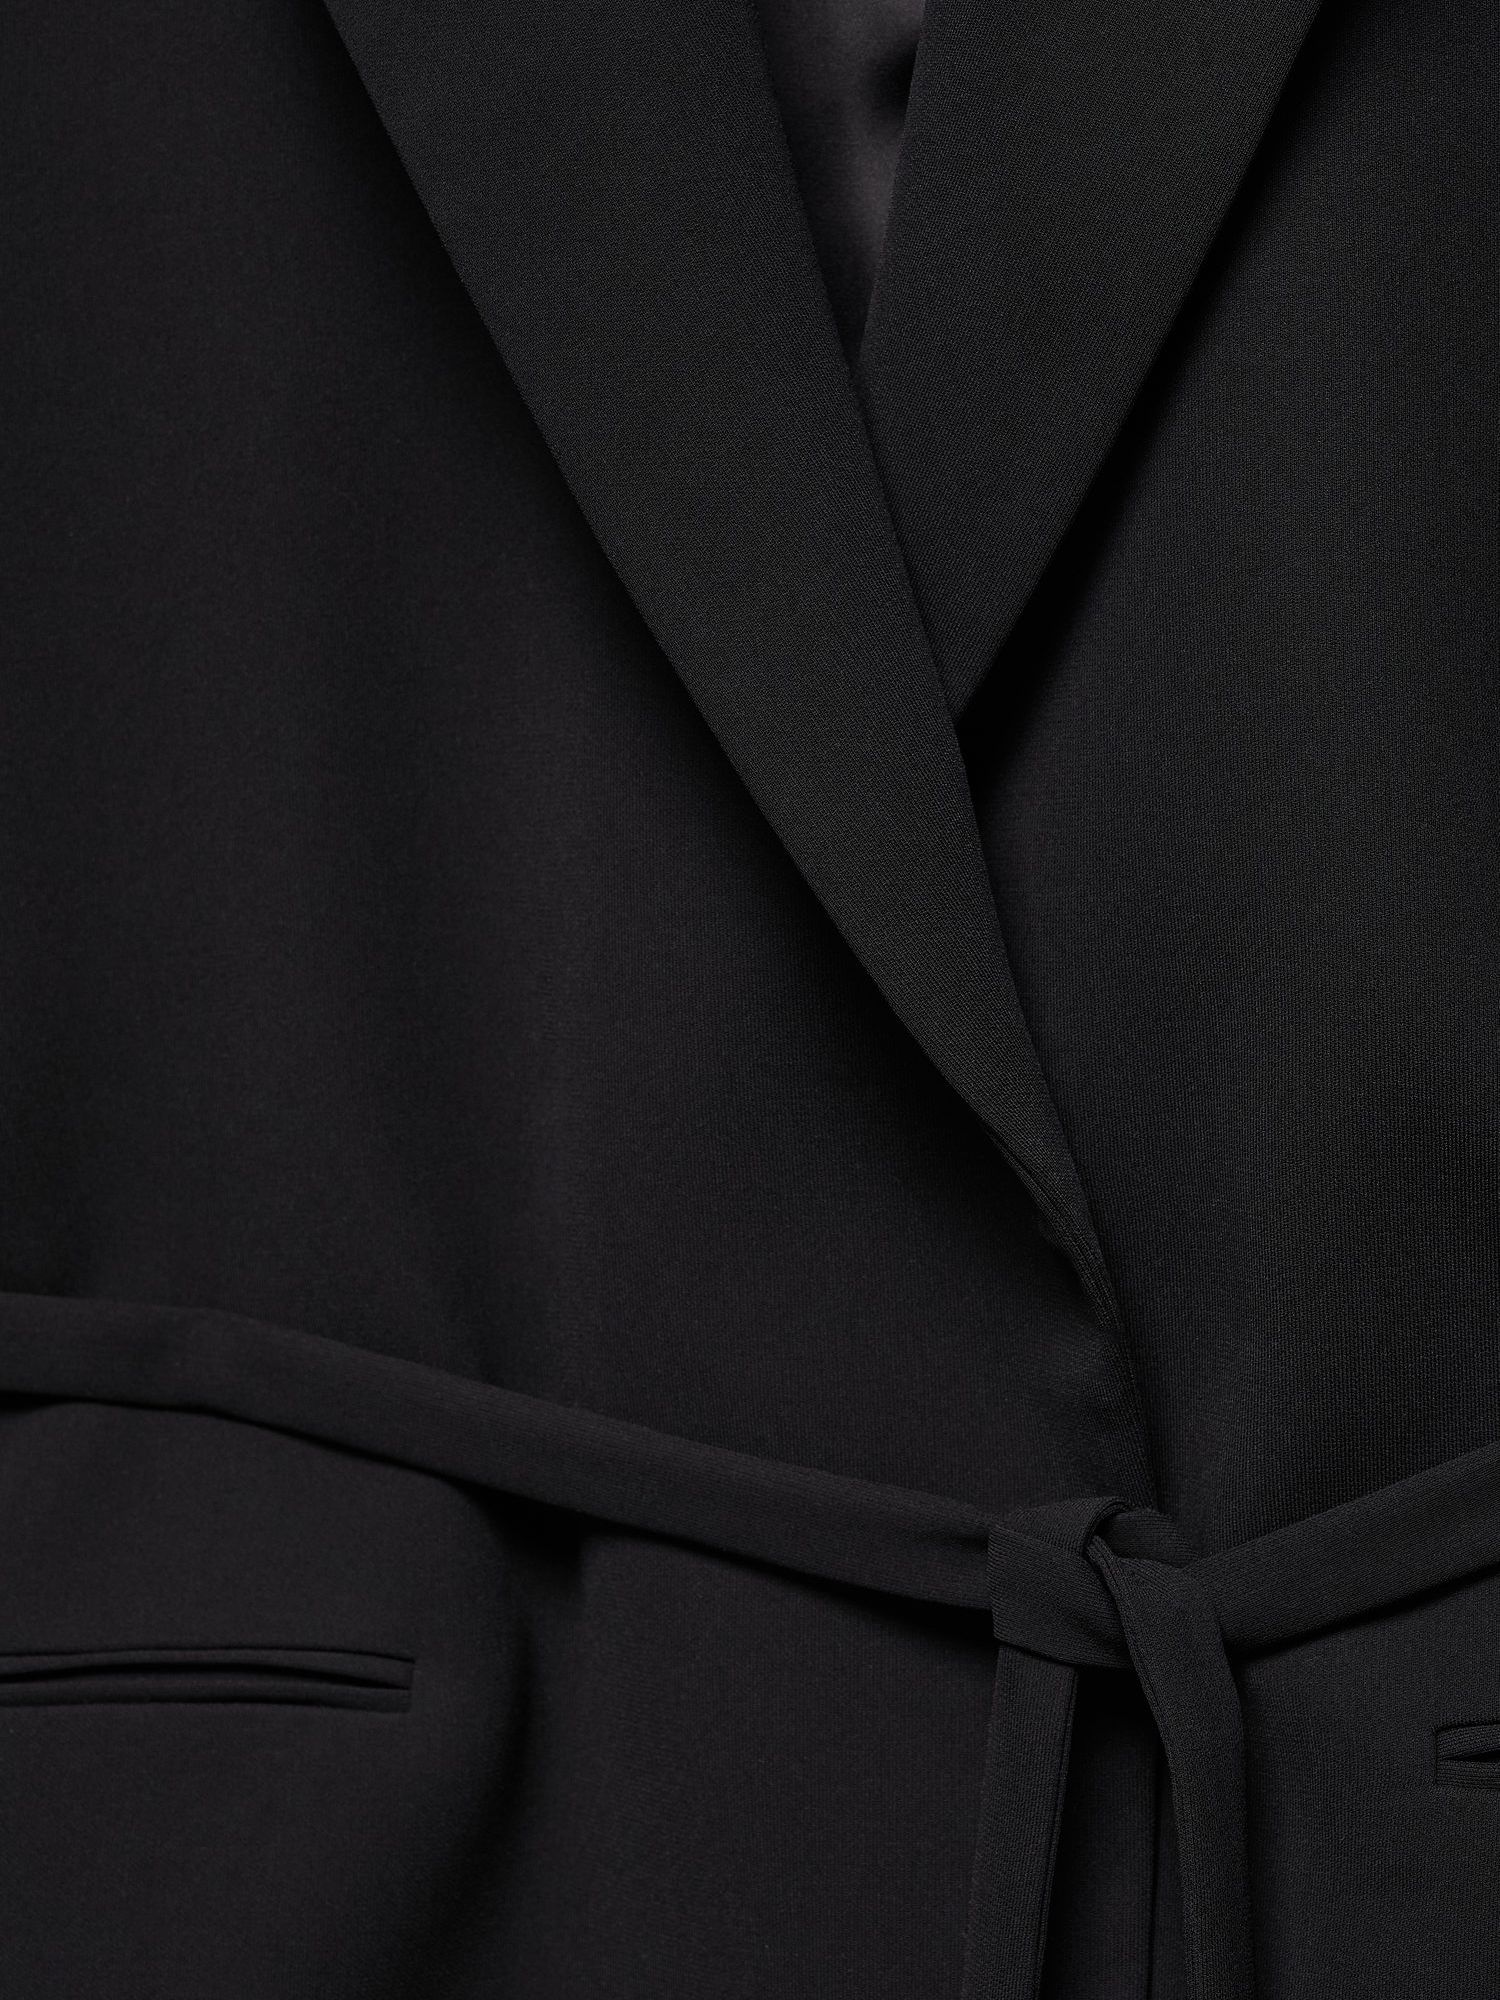 Buy Mango Tortuga Suit Blazer, Black Online at johnlewis.com